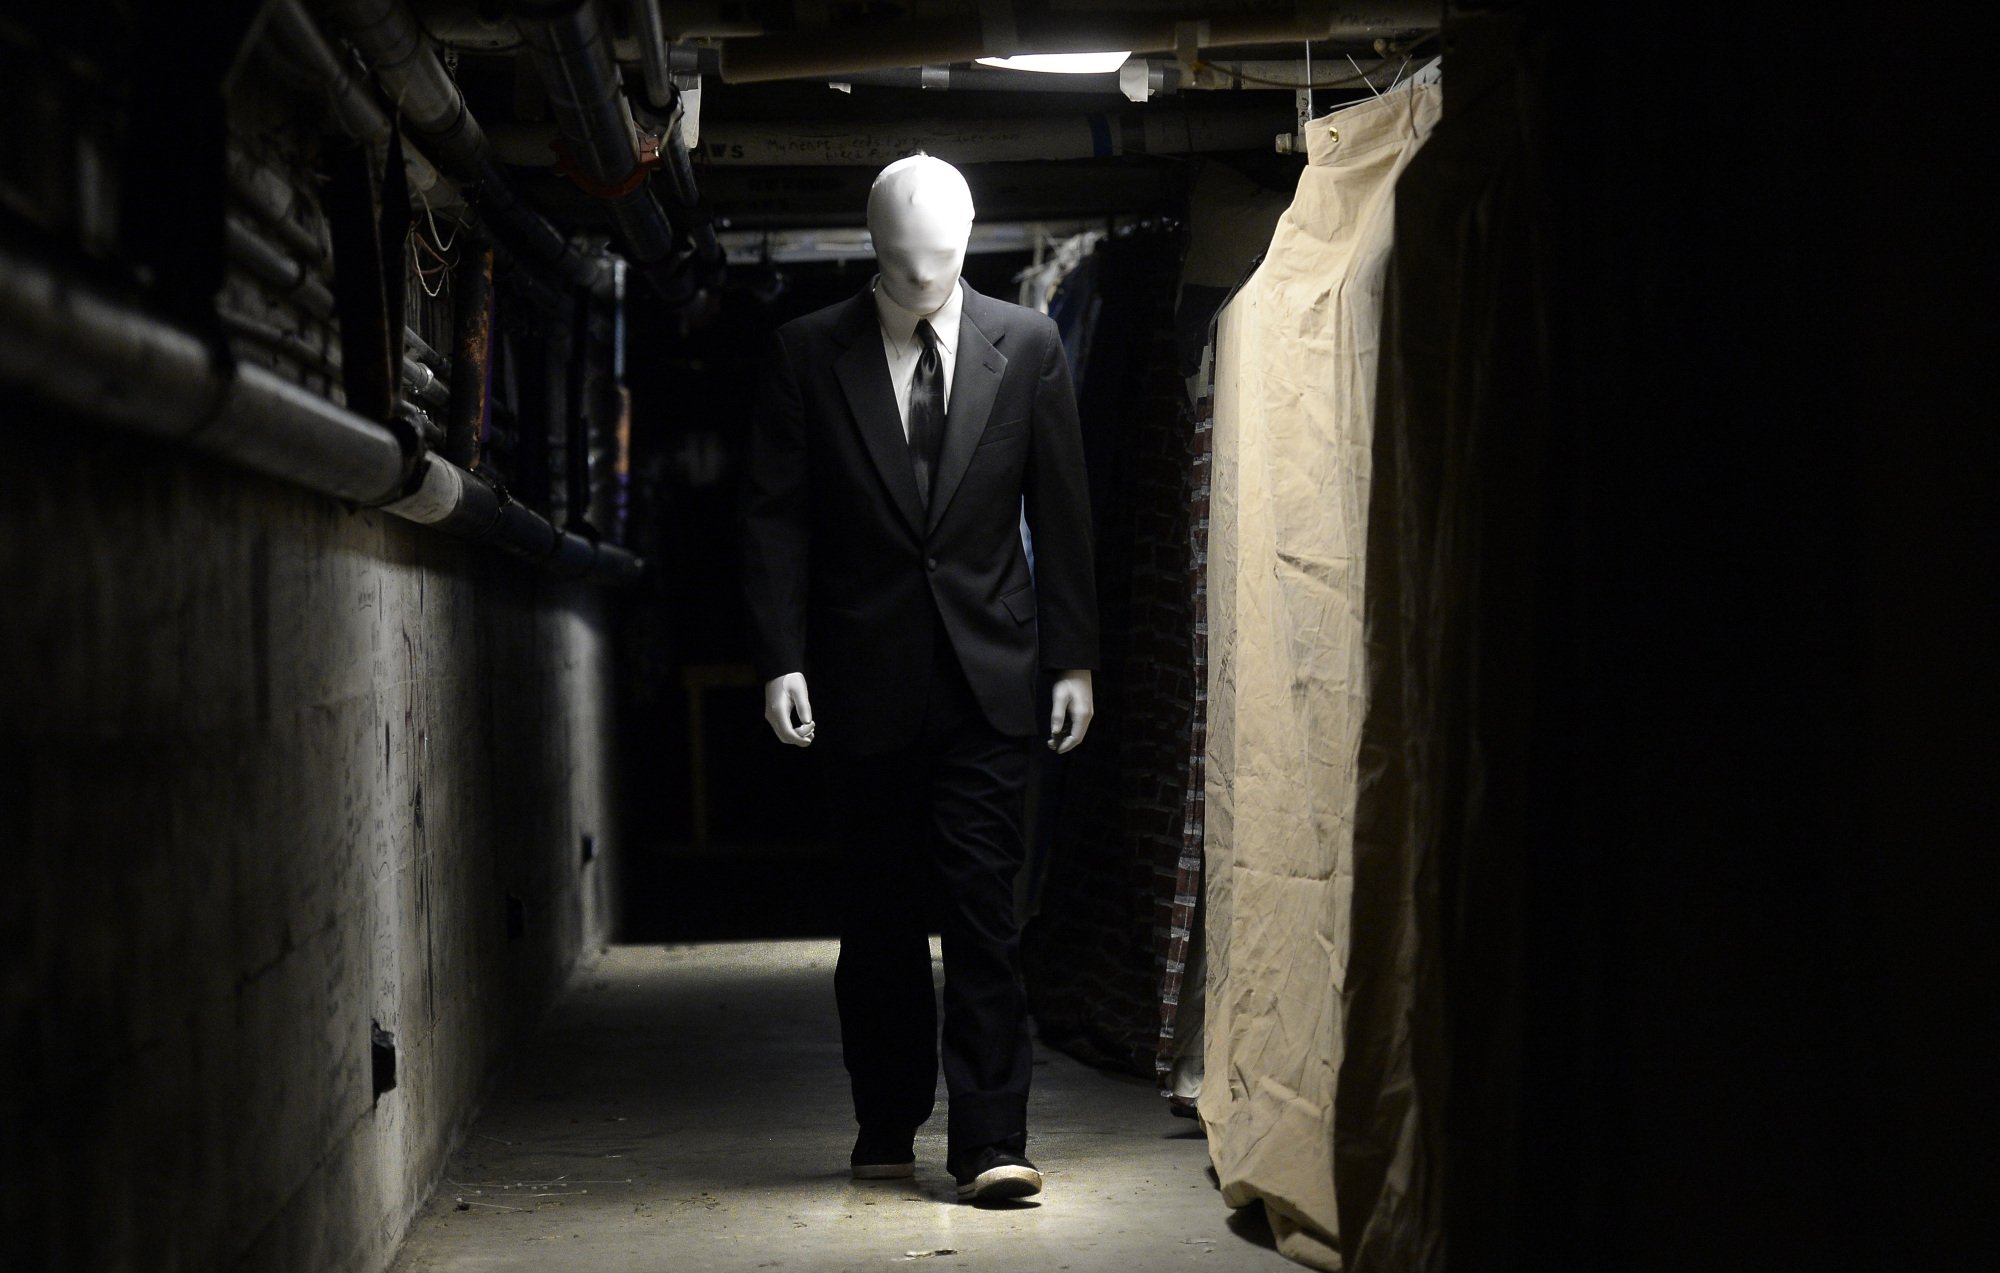 Someone dressed as Slender Man walks down a dimly lit hallway.